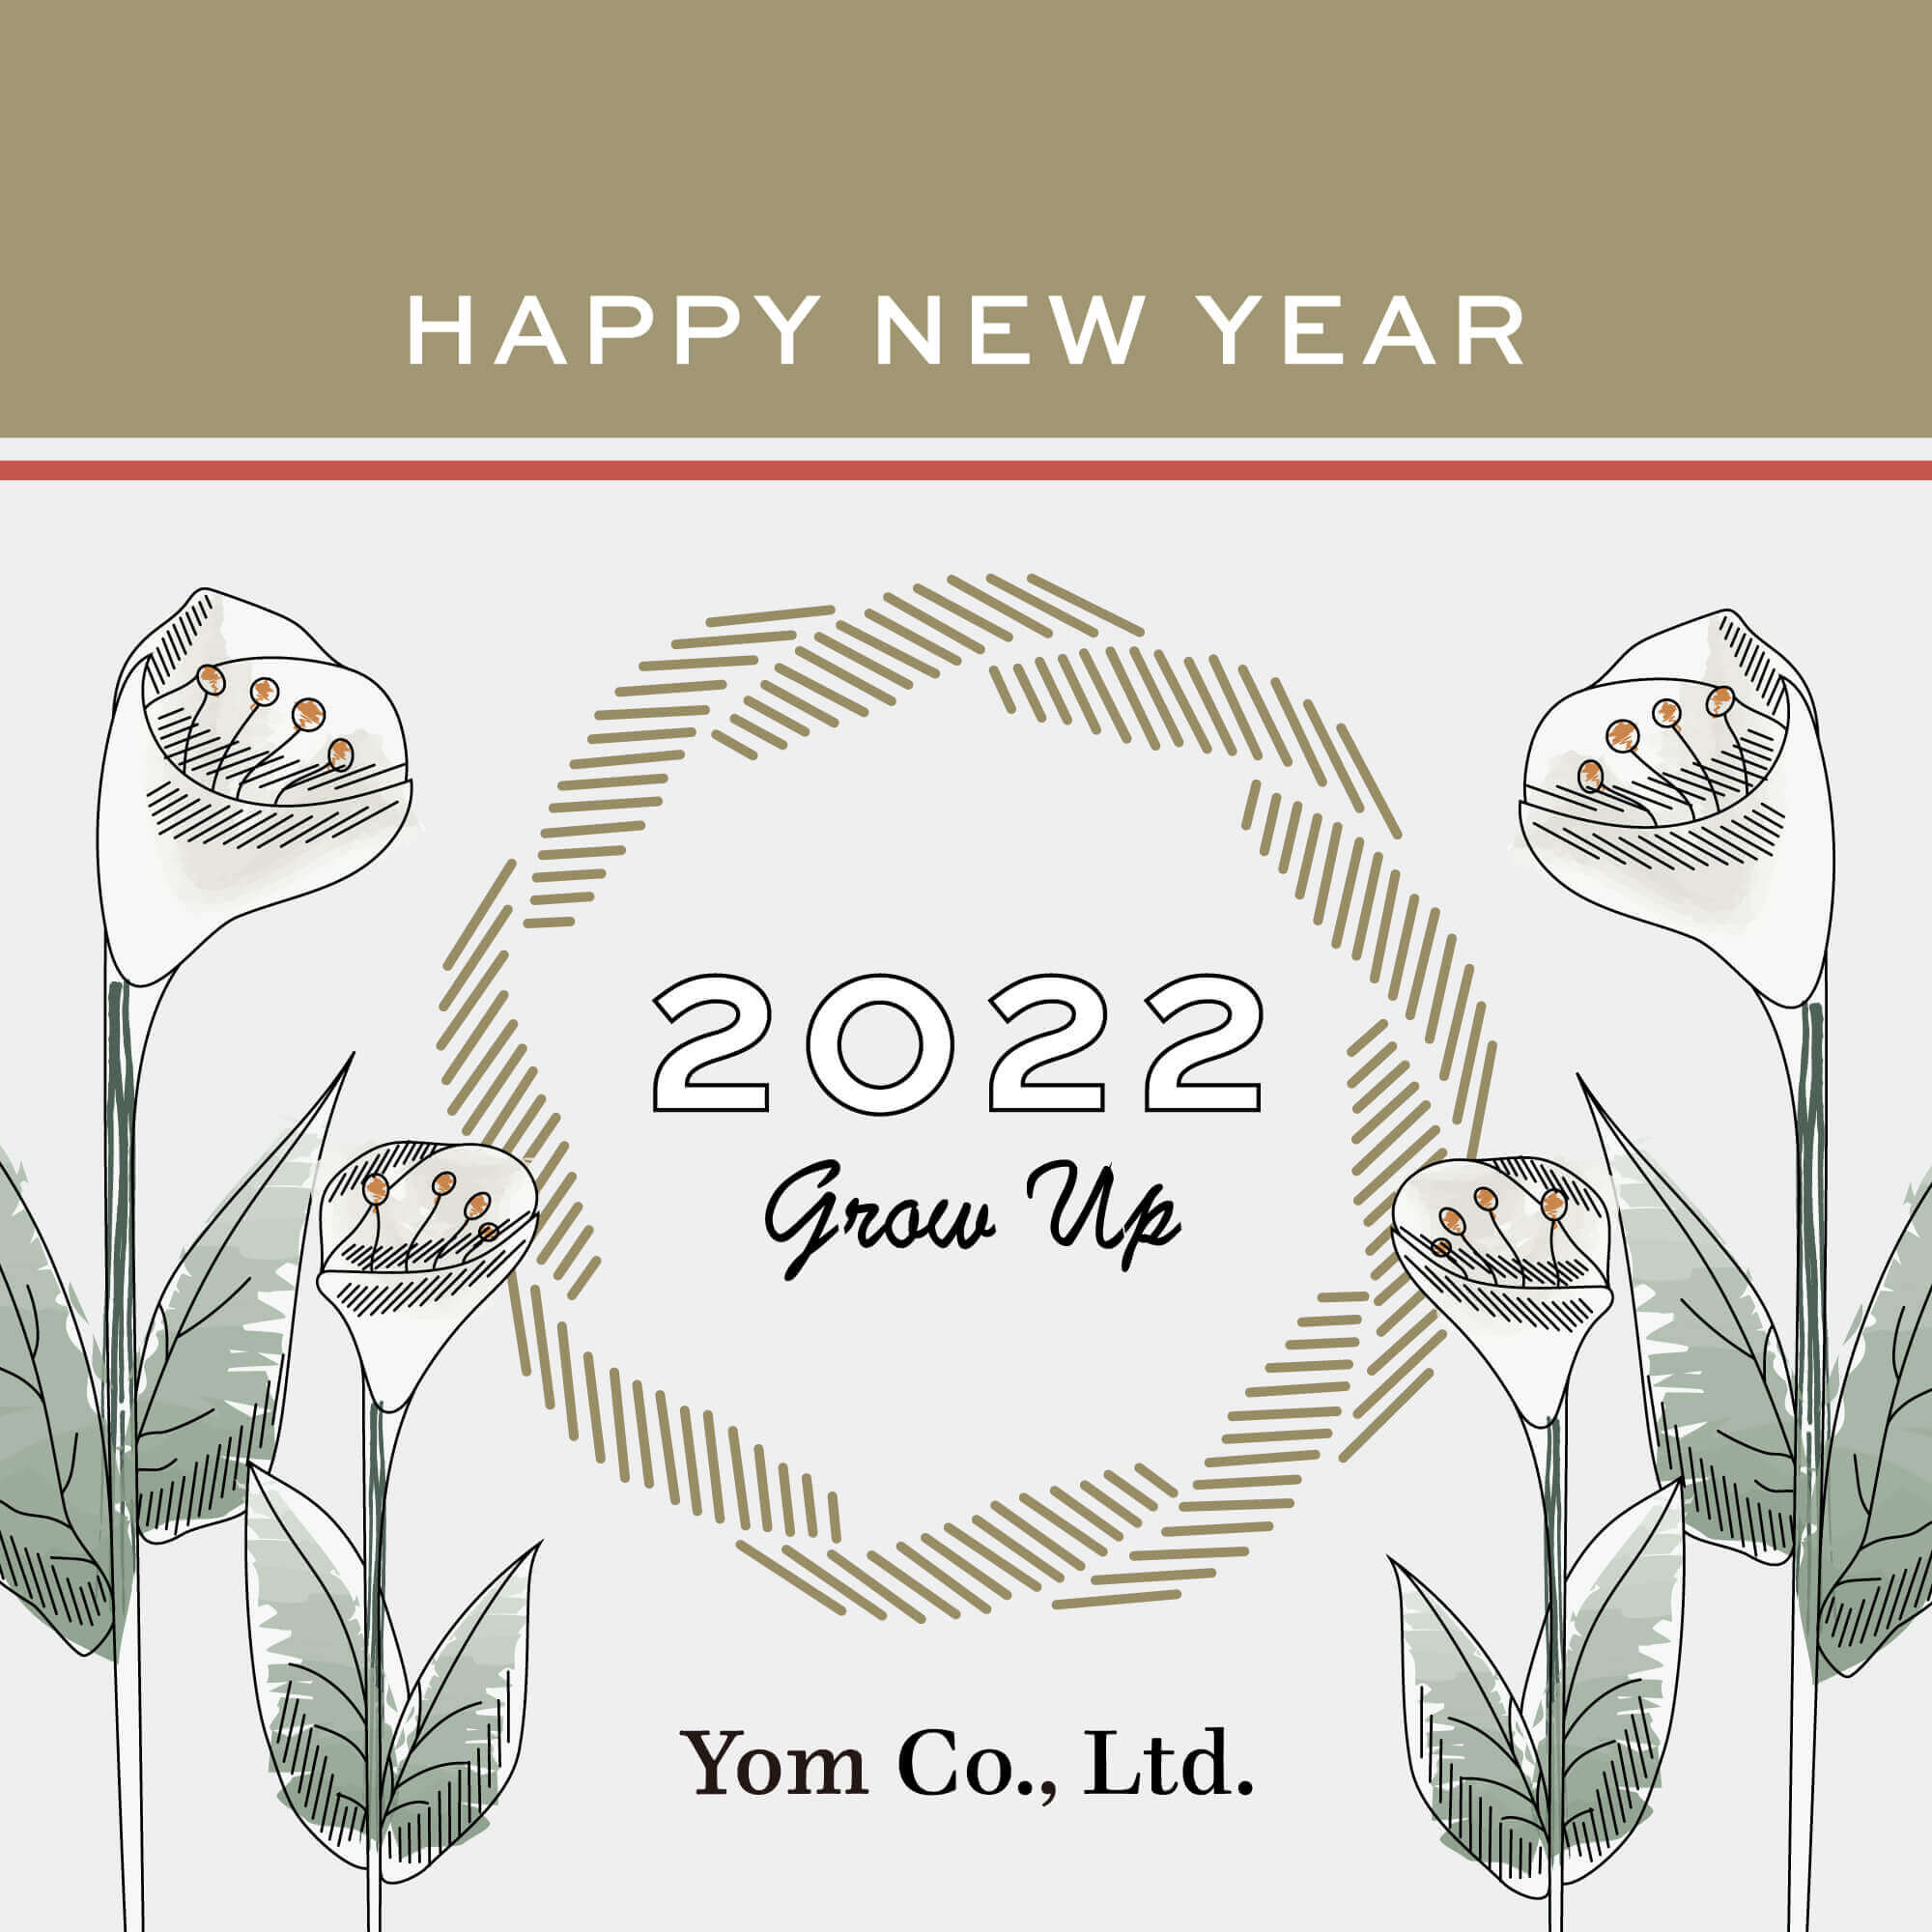 HAPPY NEW YEAR 2022！